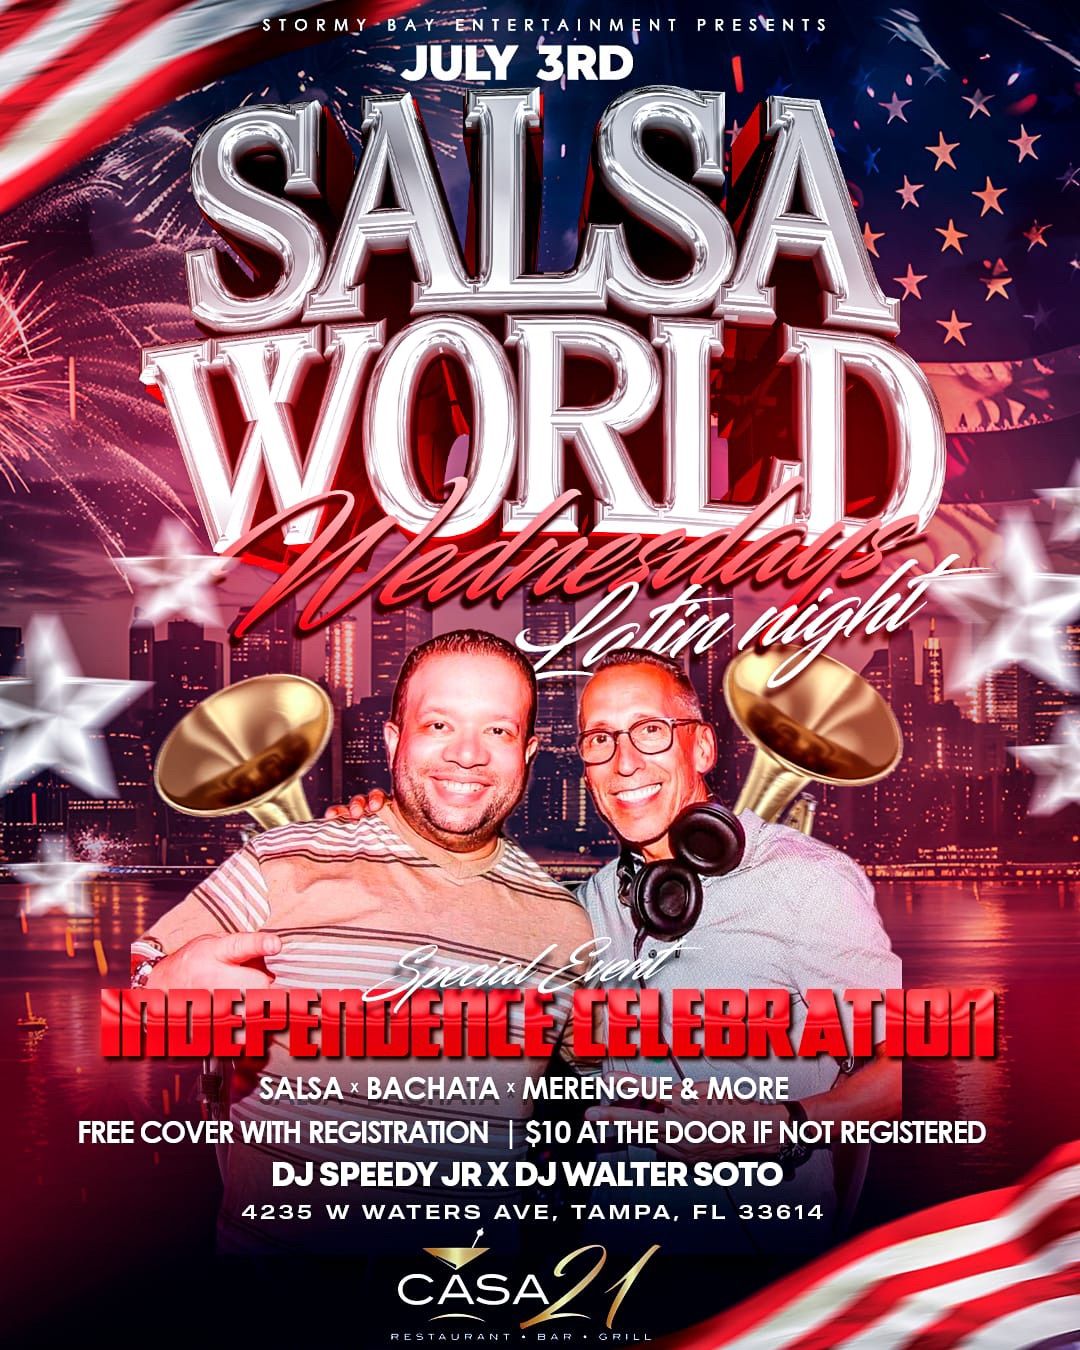 Salsa World Wednesdays "Latin Night" Pre-4th of July Party!